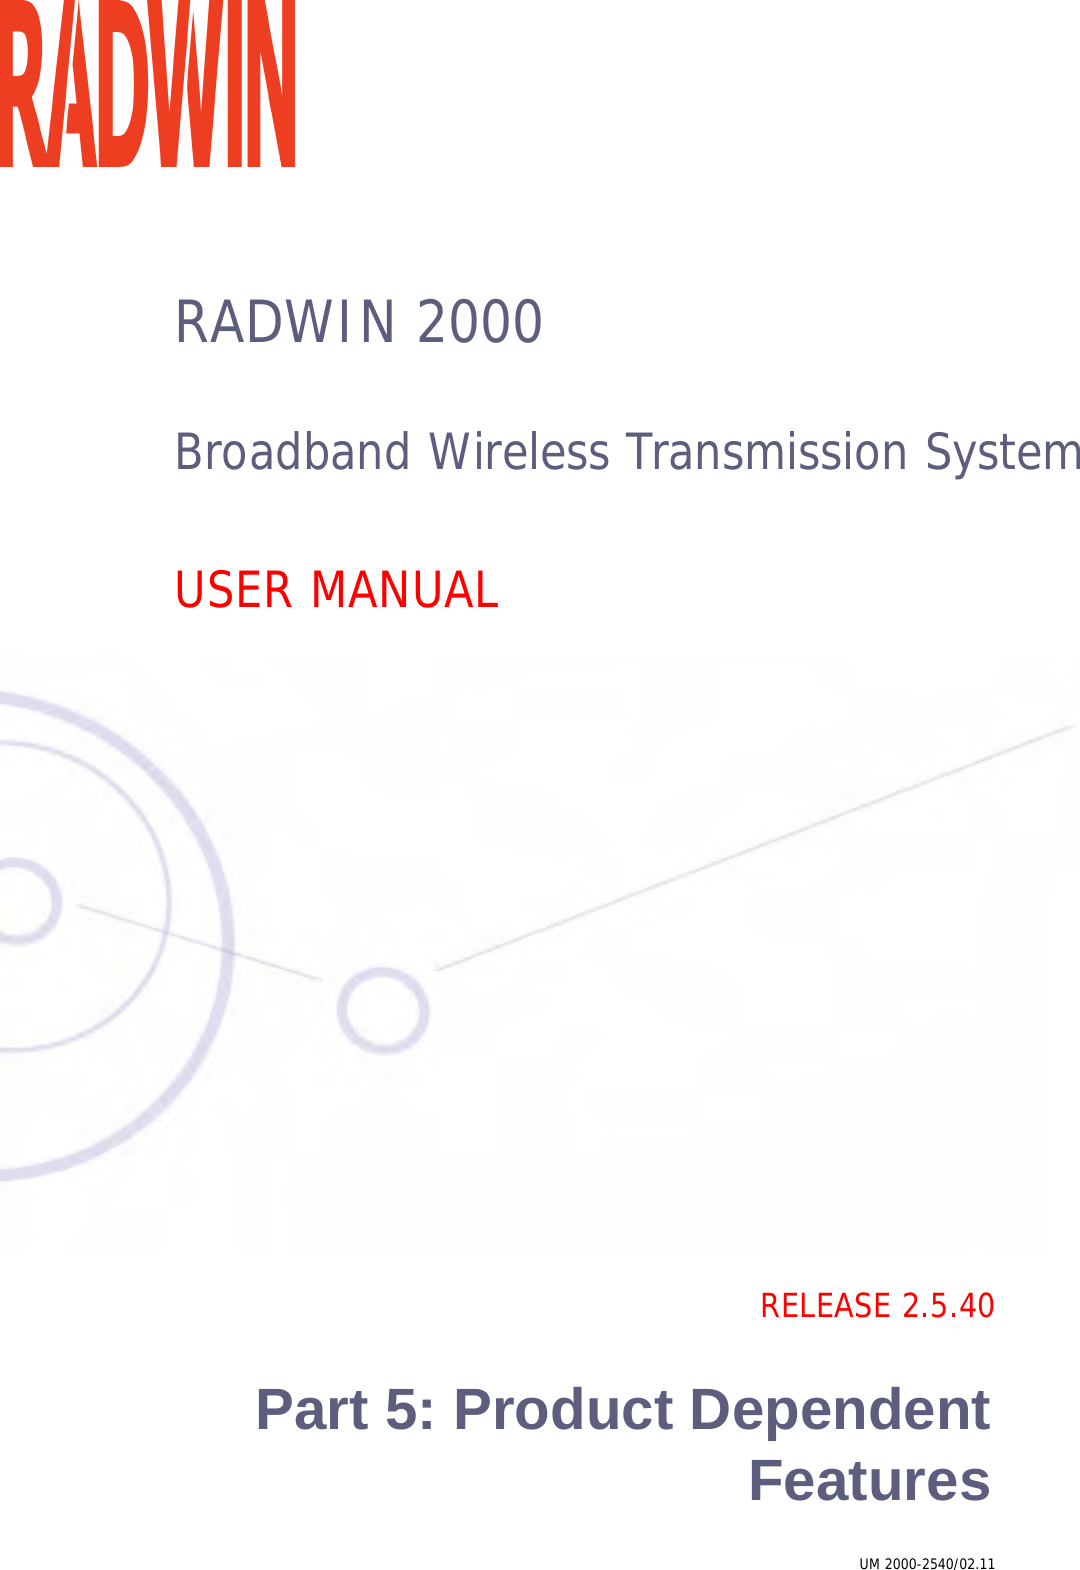 RADWIN 2000Broadband Wireless Transmission SystemUSER MANUALRELEASE 2.5.40Part 5: Product DependentFeaturesUM 2000-2540/02.11